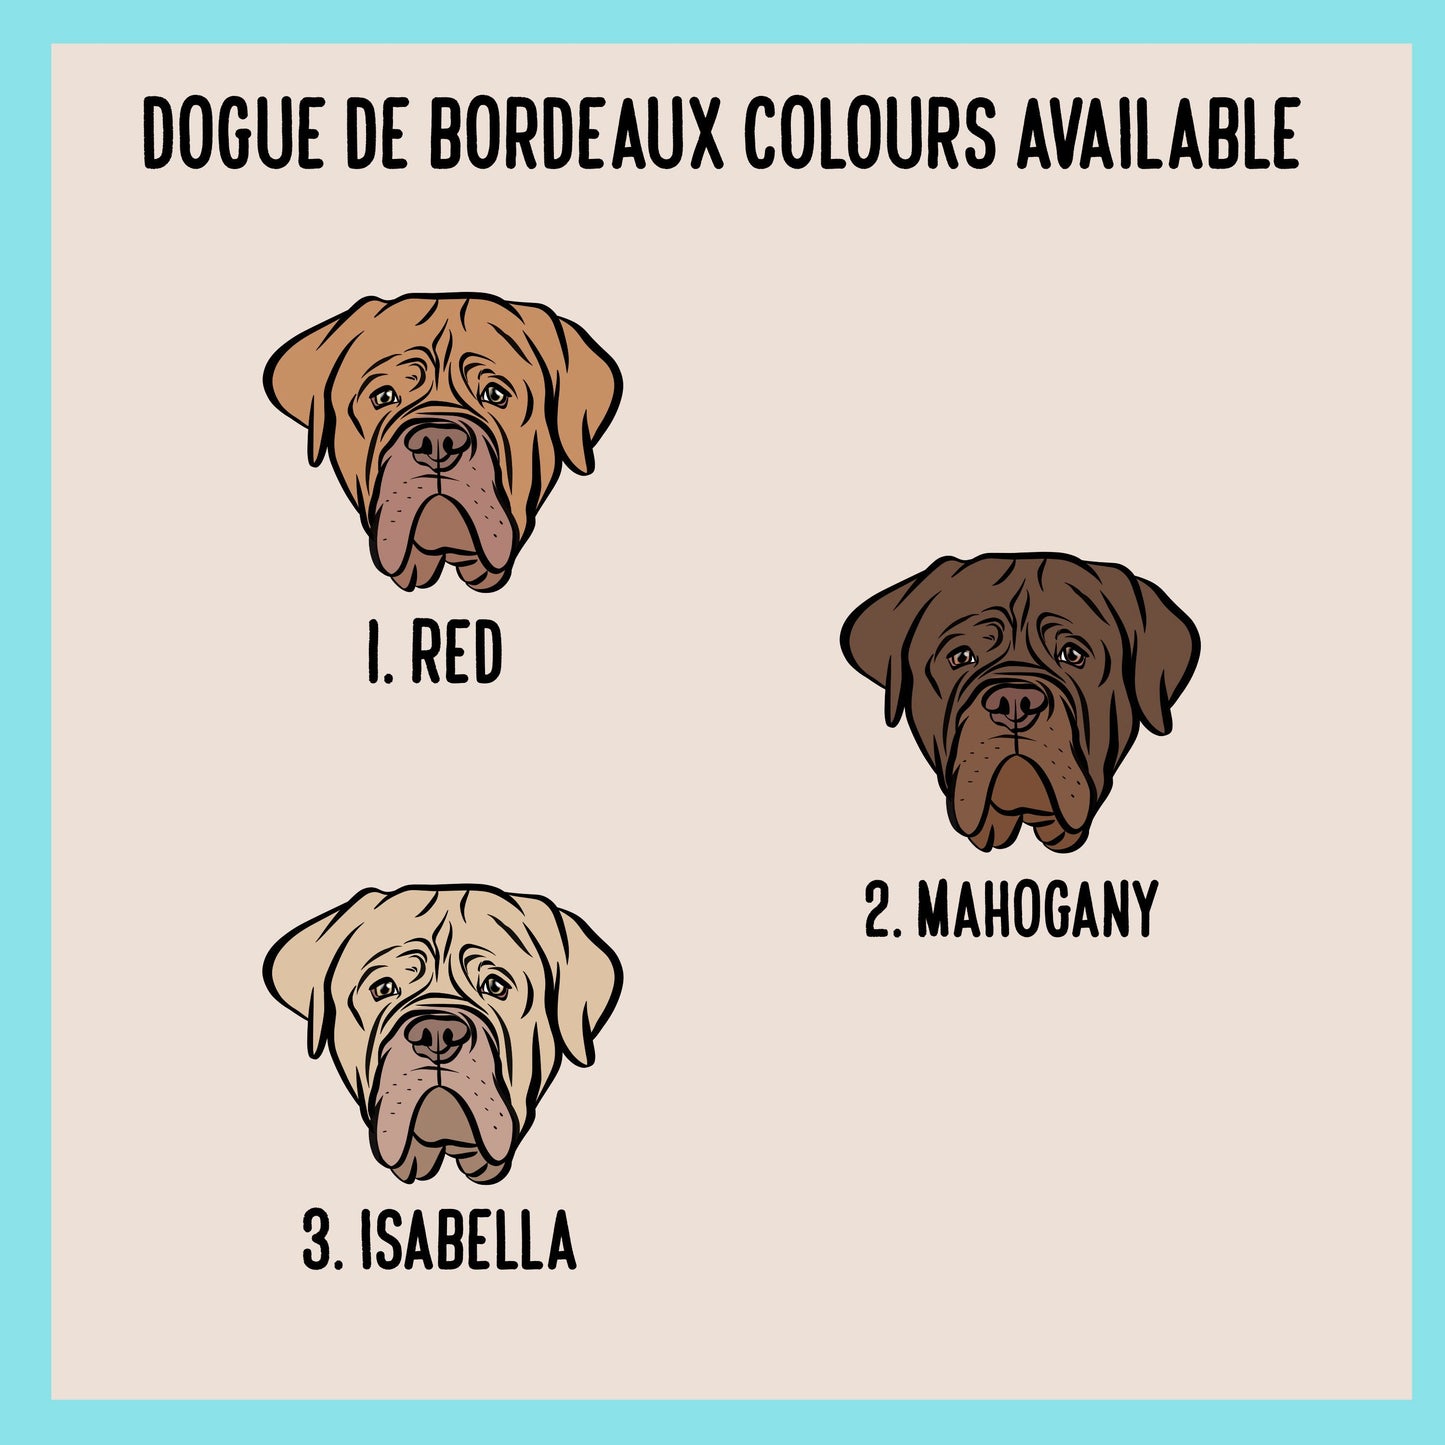 Dogue De Bordeaux Baby Bib